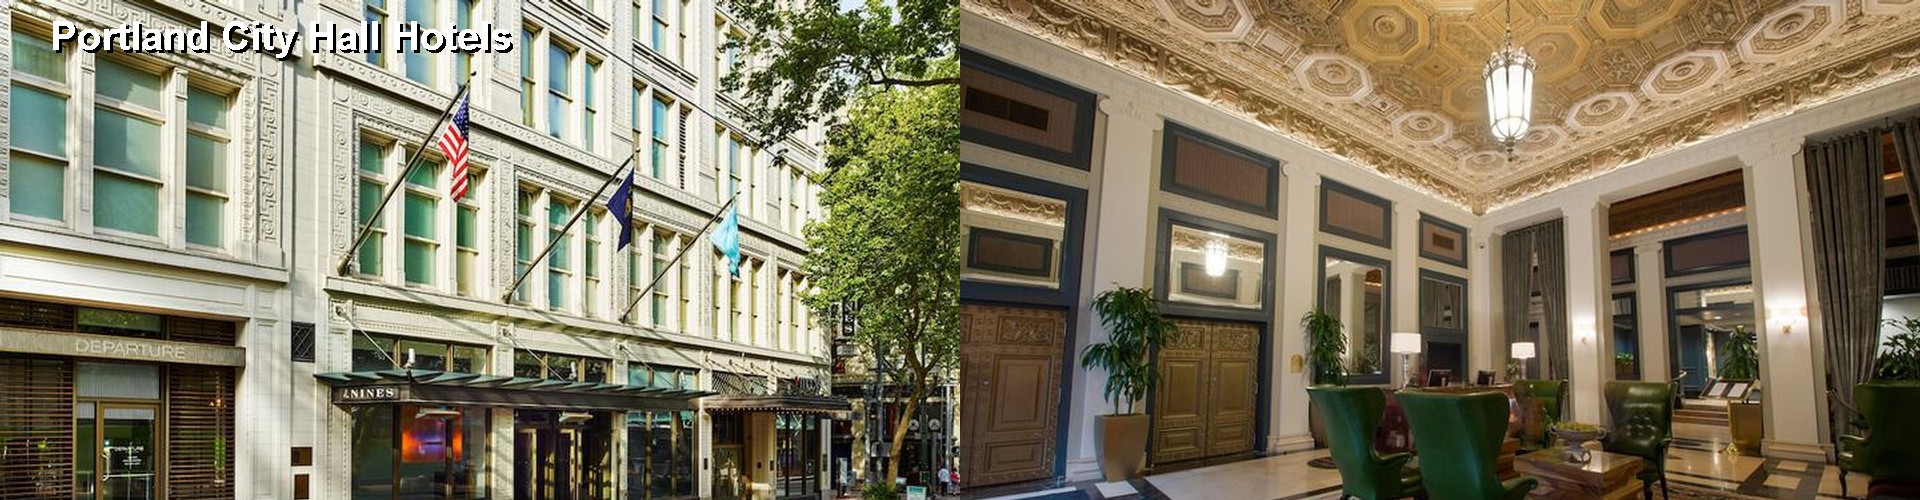 5 Best Hotels near Portland City Hall